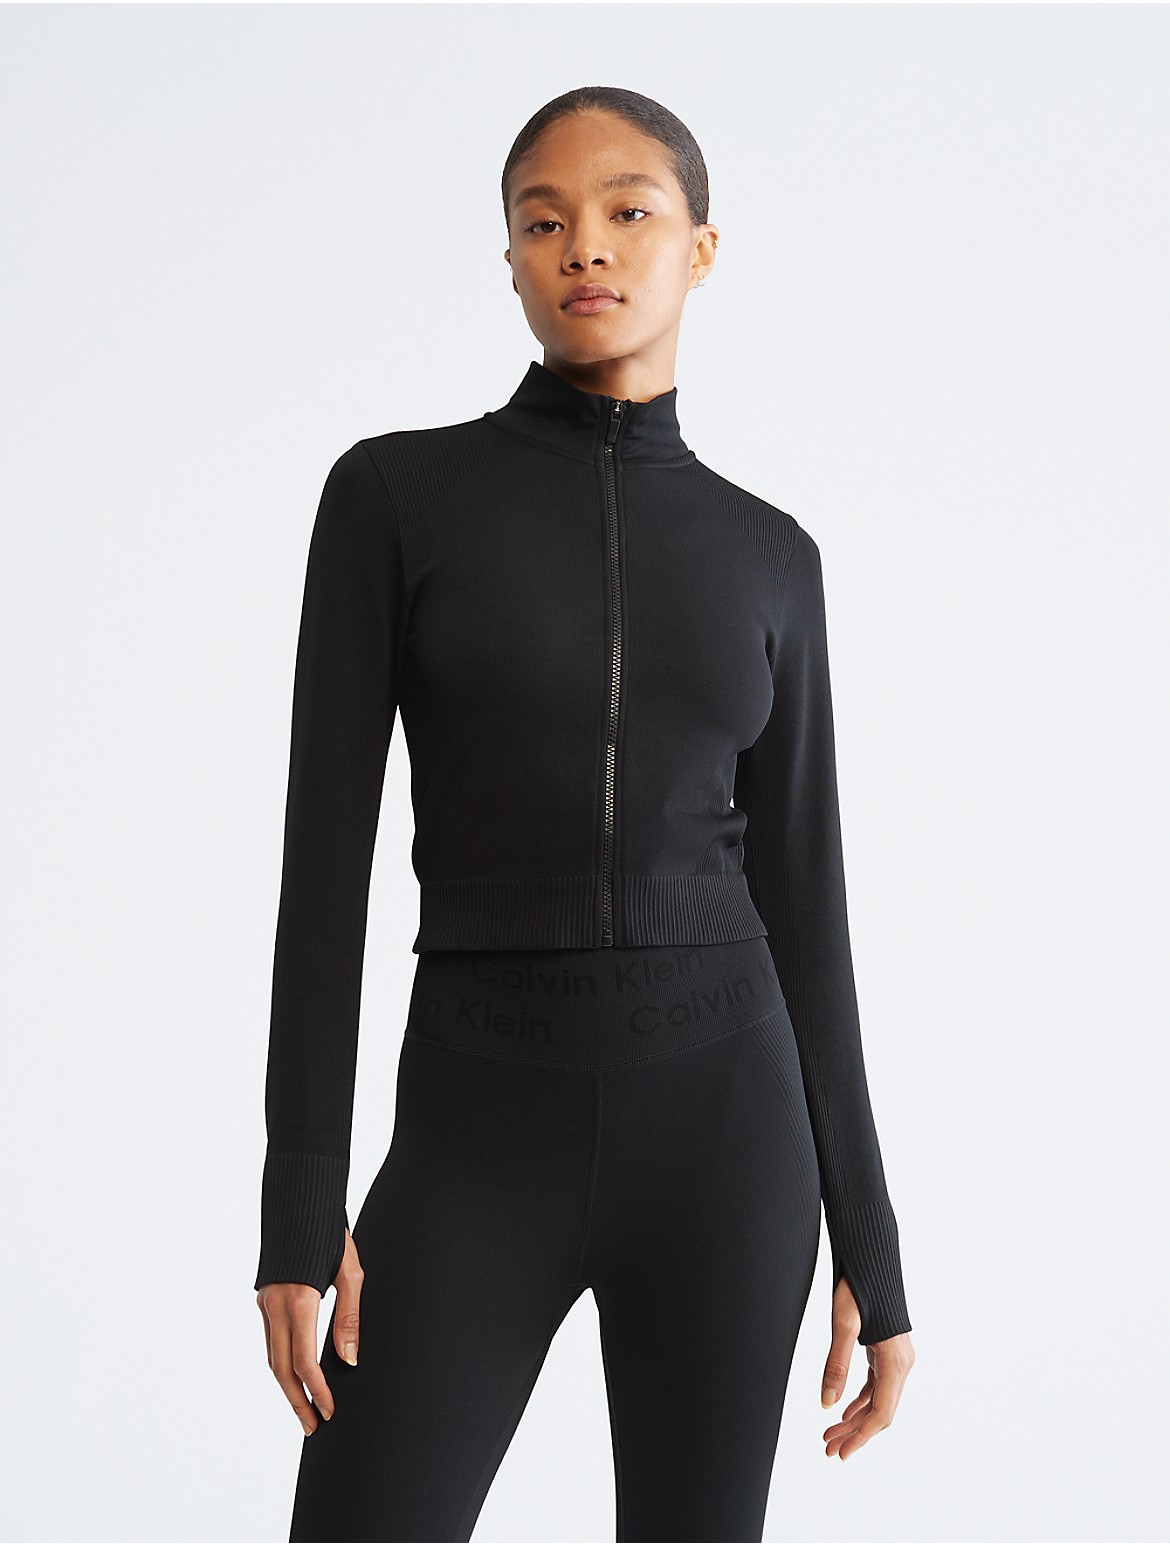 Calvin Klein Women's Performance Seamless Mock Neck Jacket - Black - XL